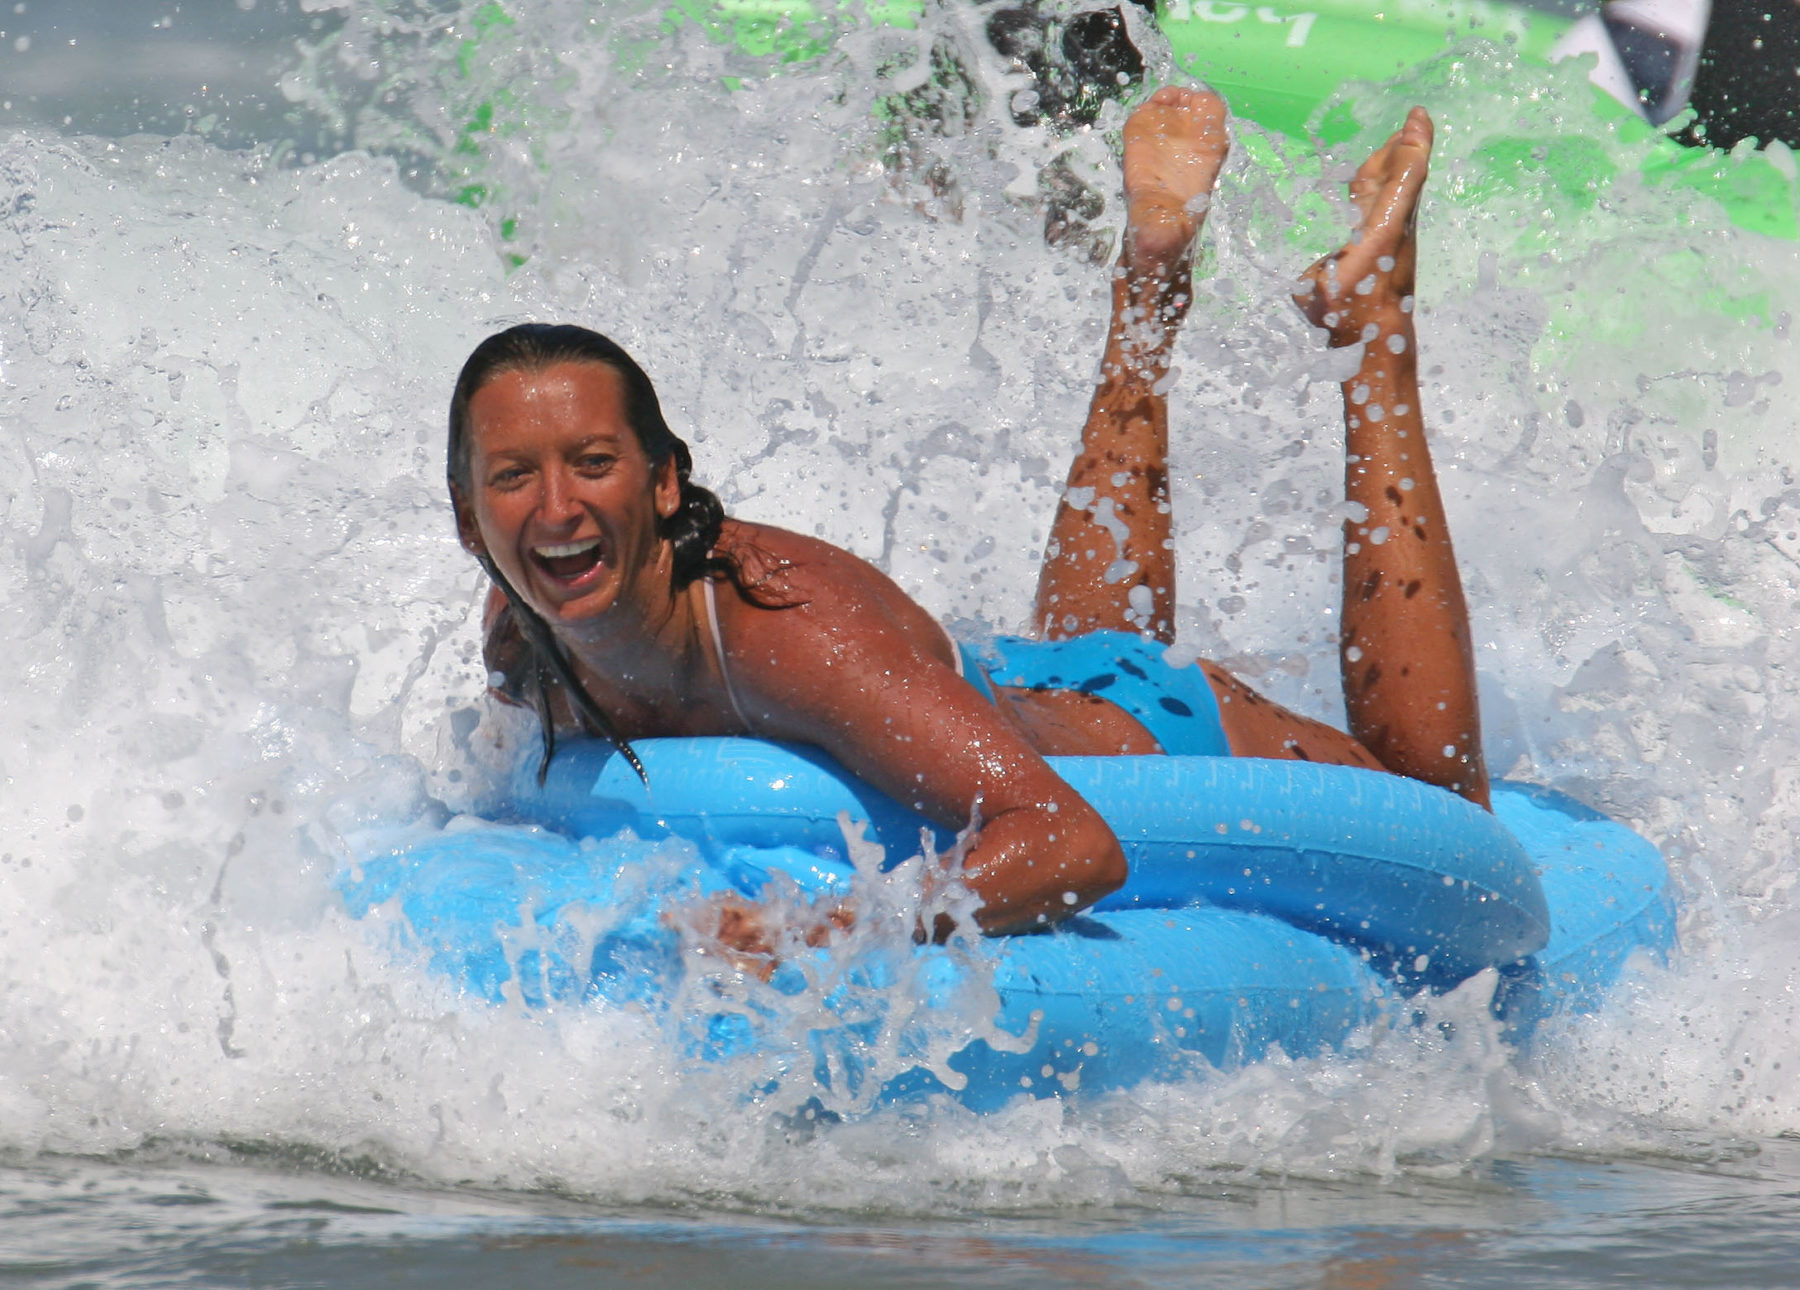 layne-beachley-tan-having-fun-on-inflatable